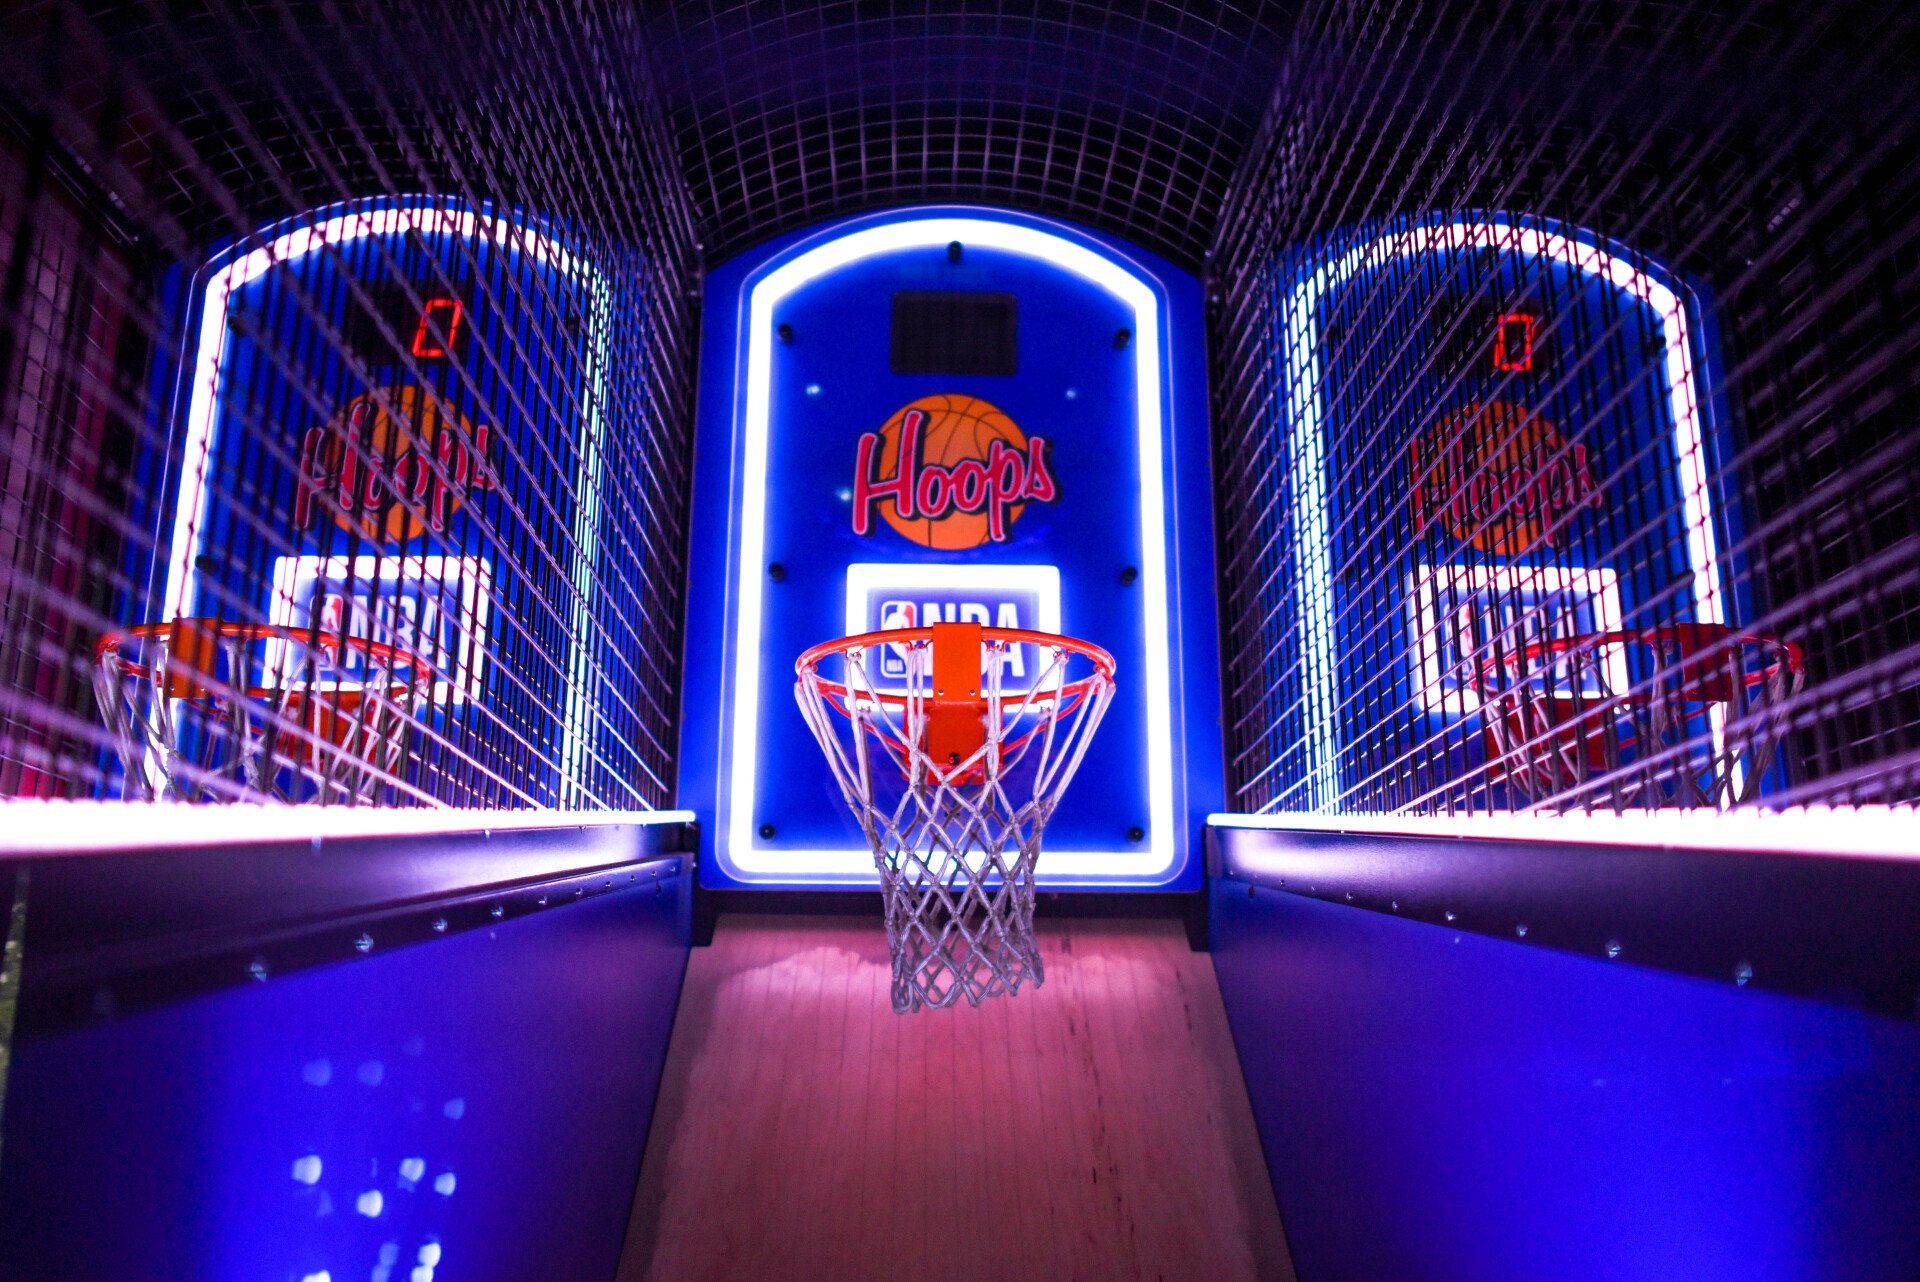 glow in the dark basketball arcade game